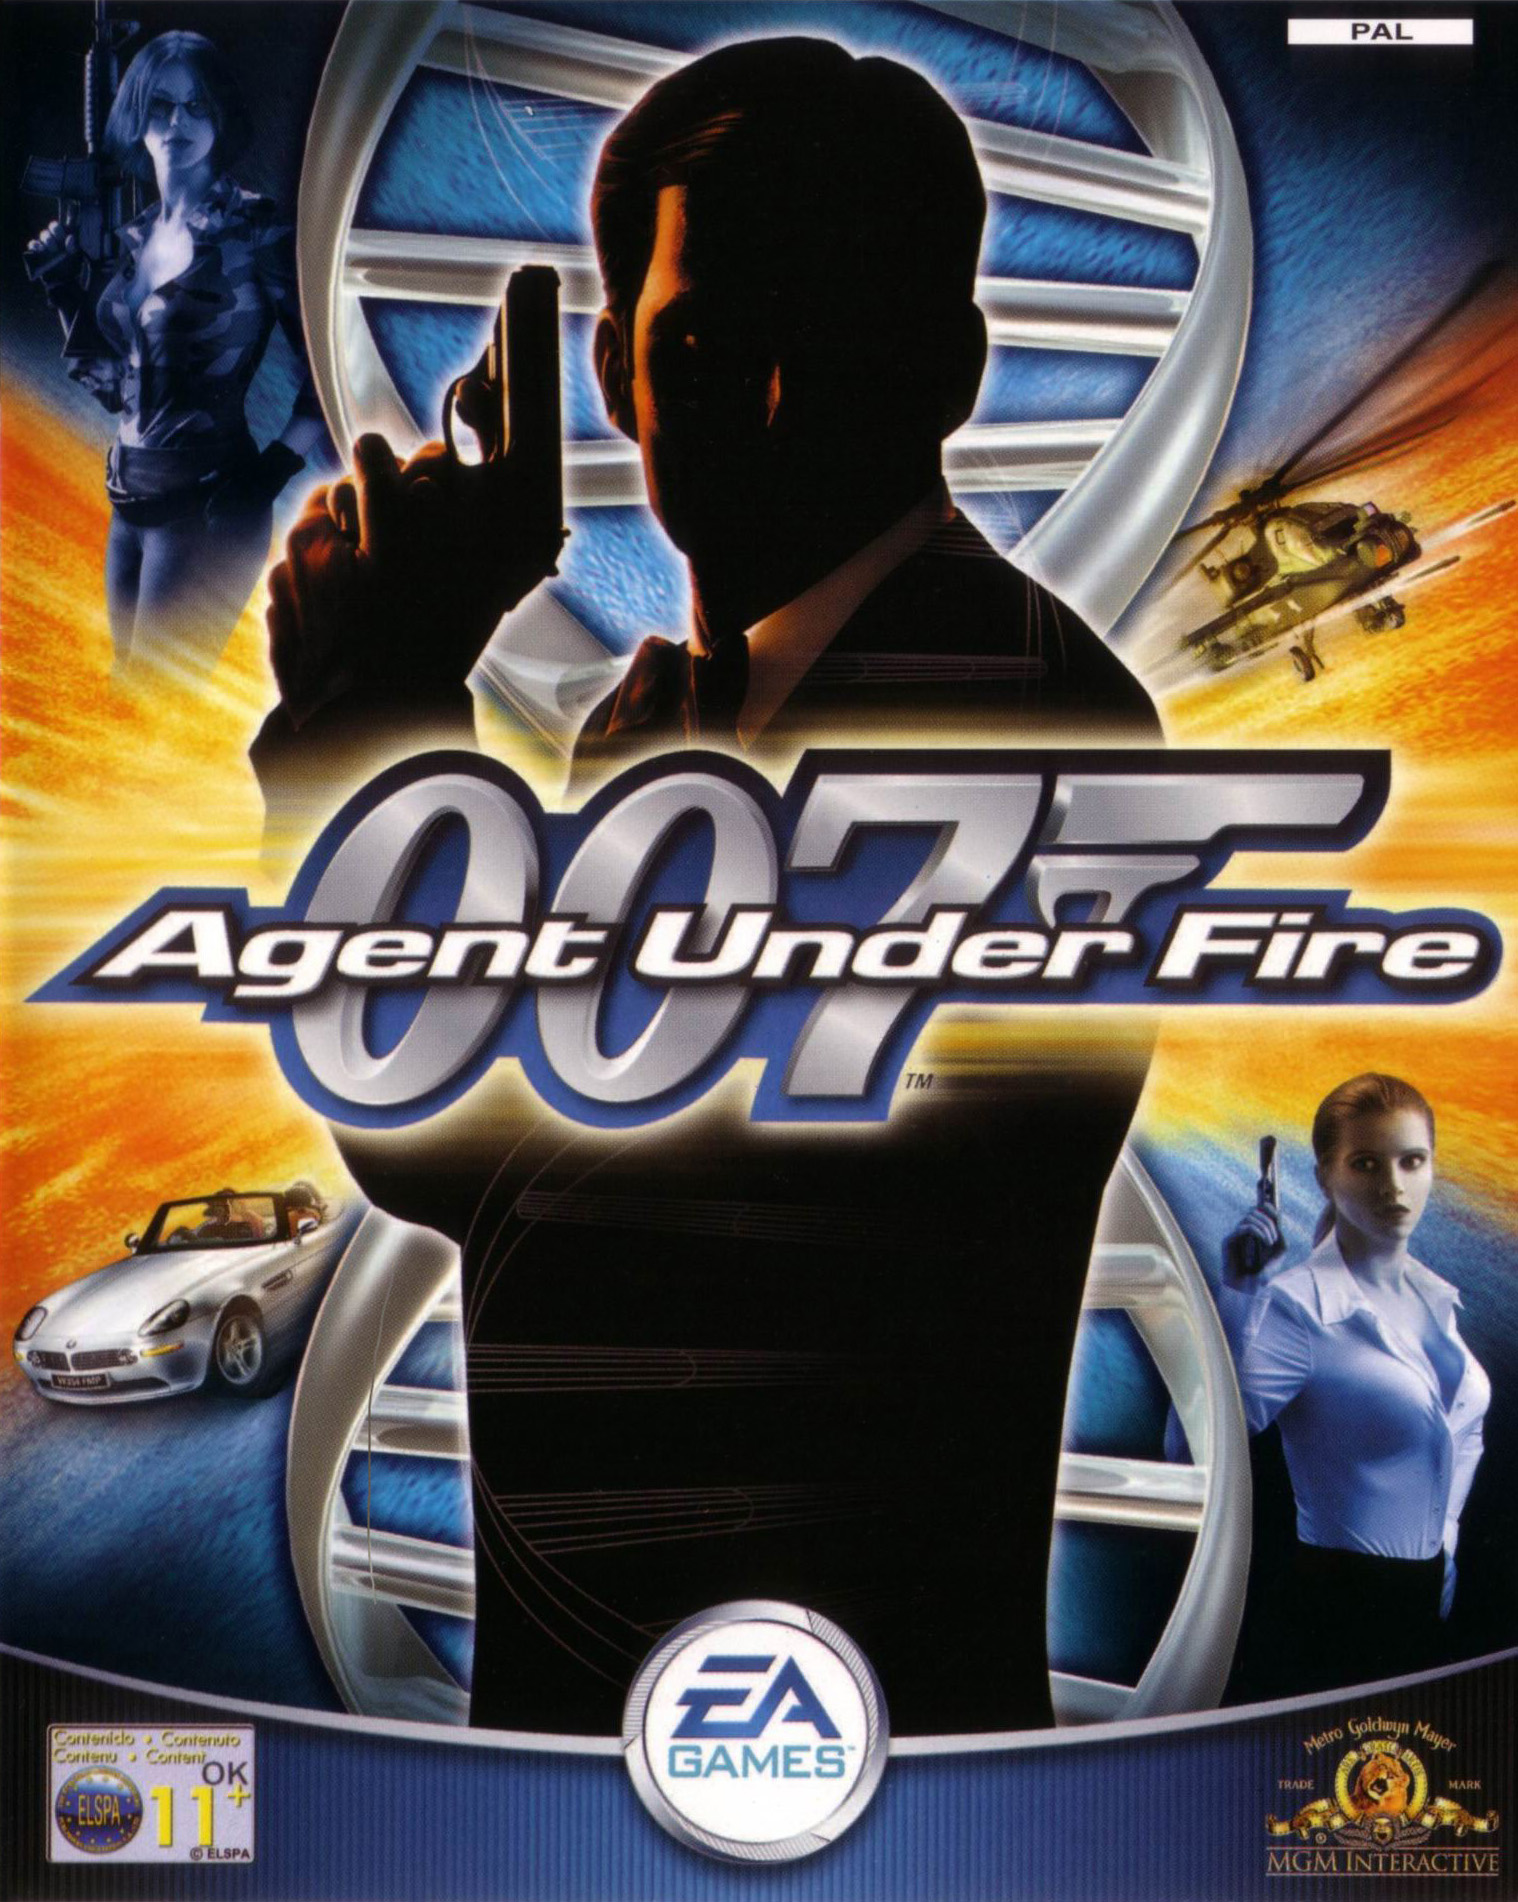 007-agent-under-fire-james-bond-guide-corry-s-blog